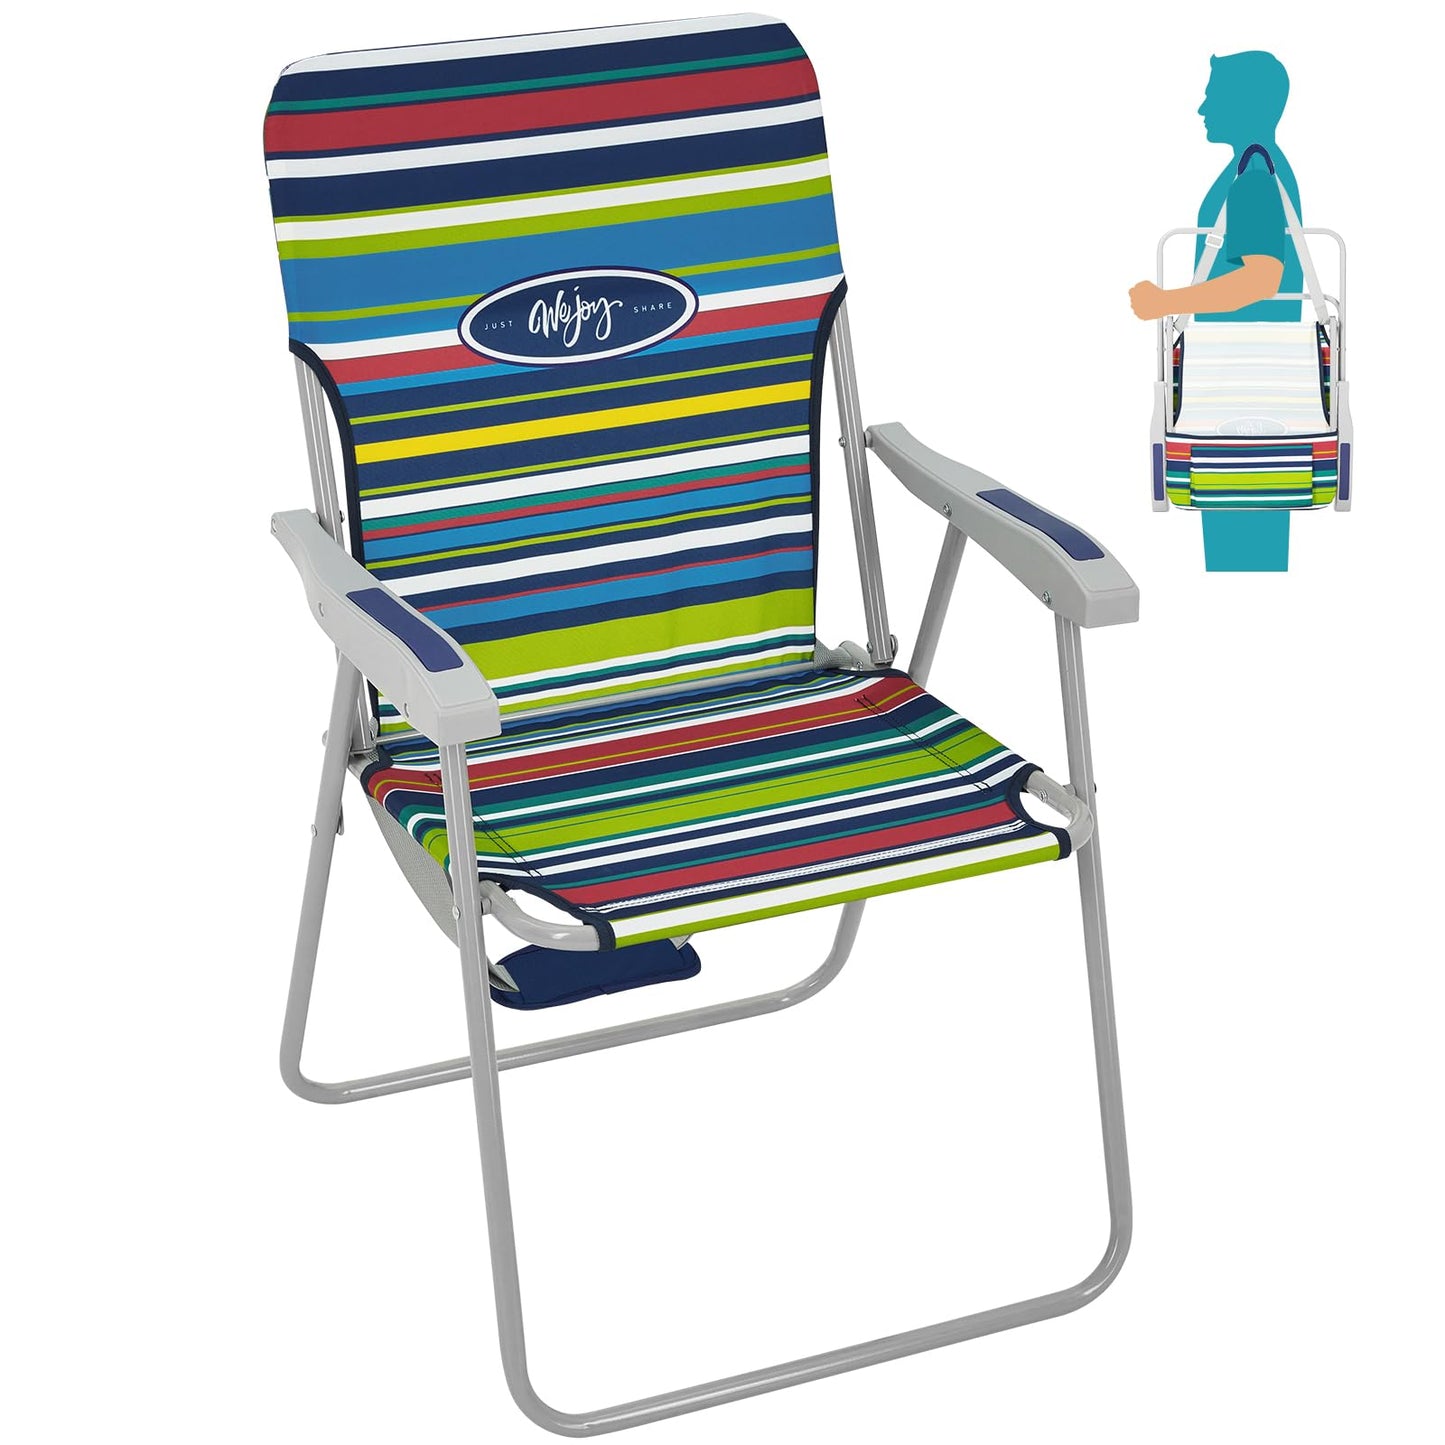 WEJOY Portable Folding High Back Lawn Beach Chair